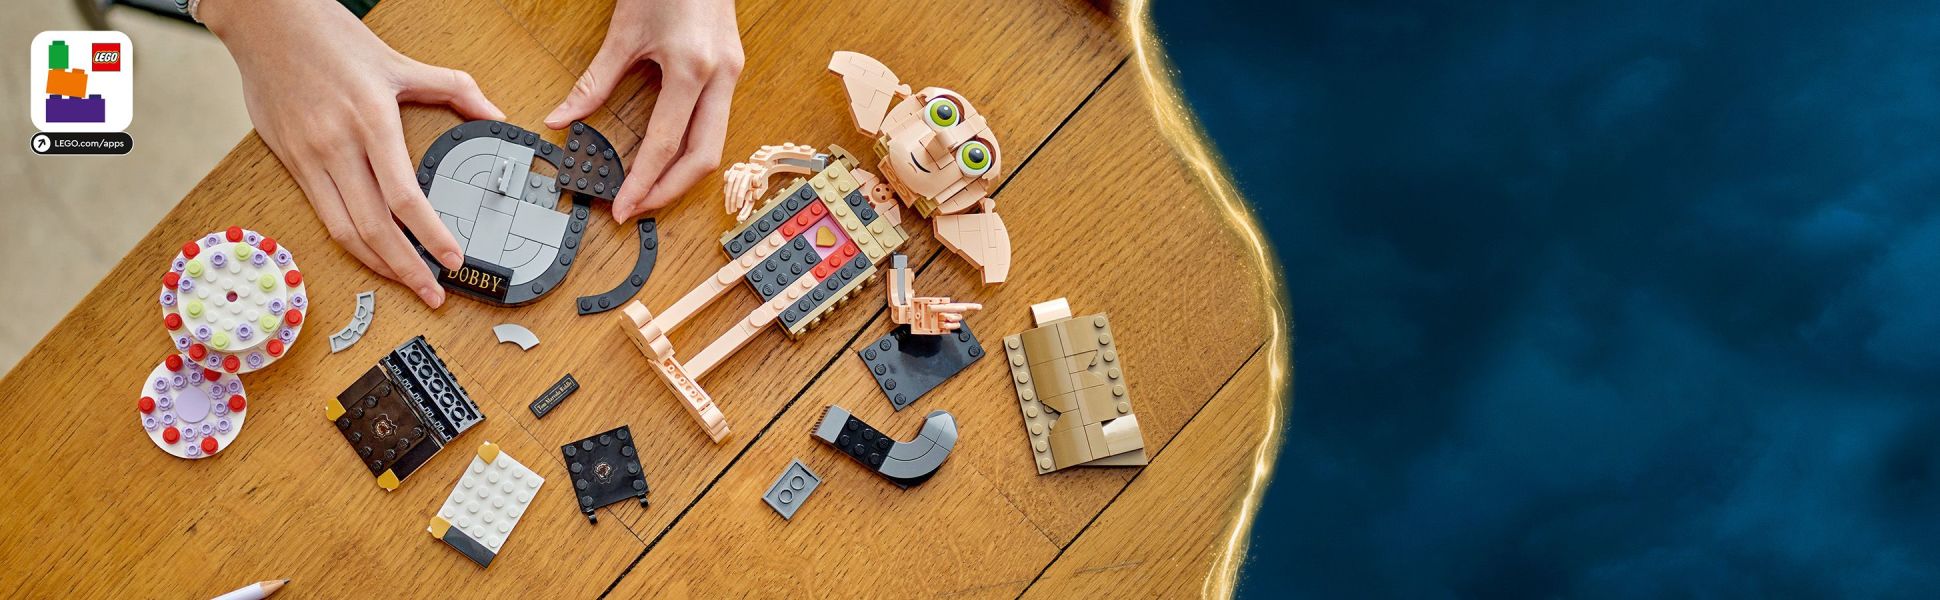 Dobby™ the House-Elf - Videos - LEGO.com for kids